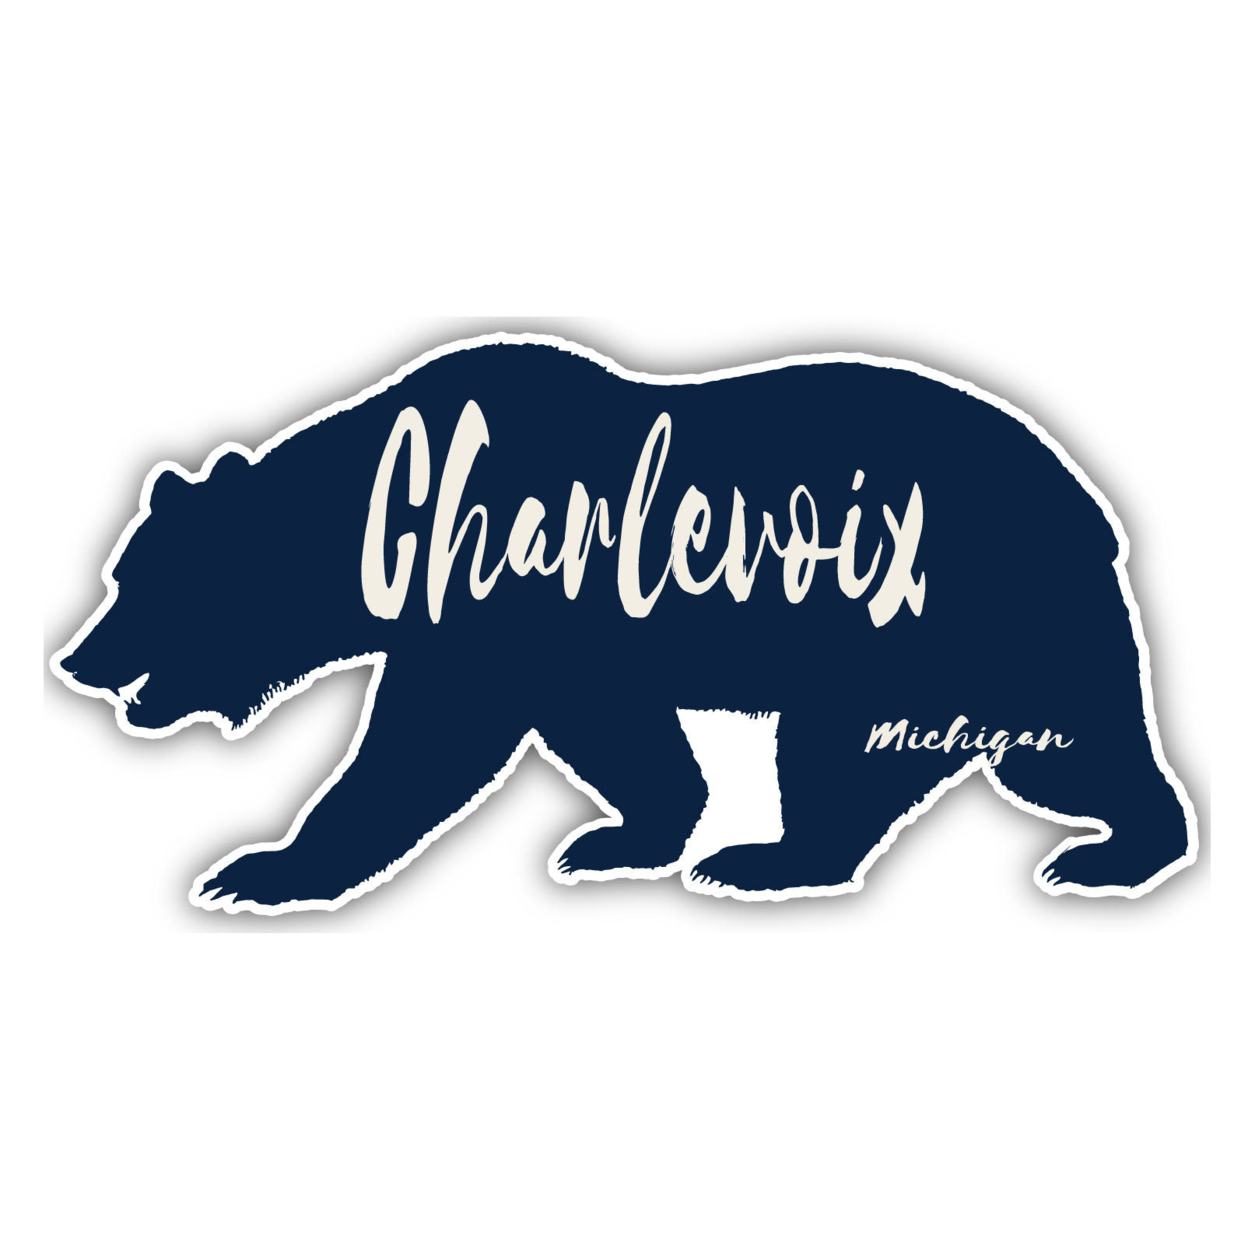 Charlevoix Michigan Souvenir Decorative Stickers (Choose Theme And Size) - Single Unit, 6-Inch, Bear